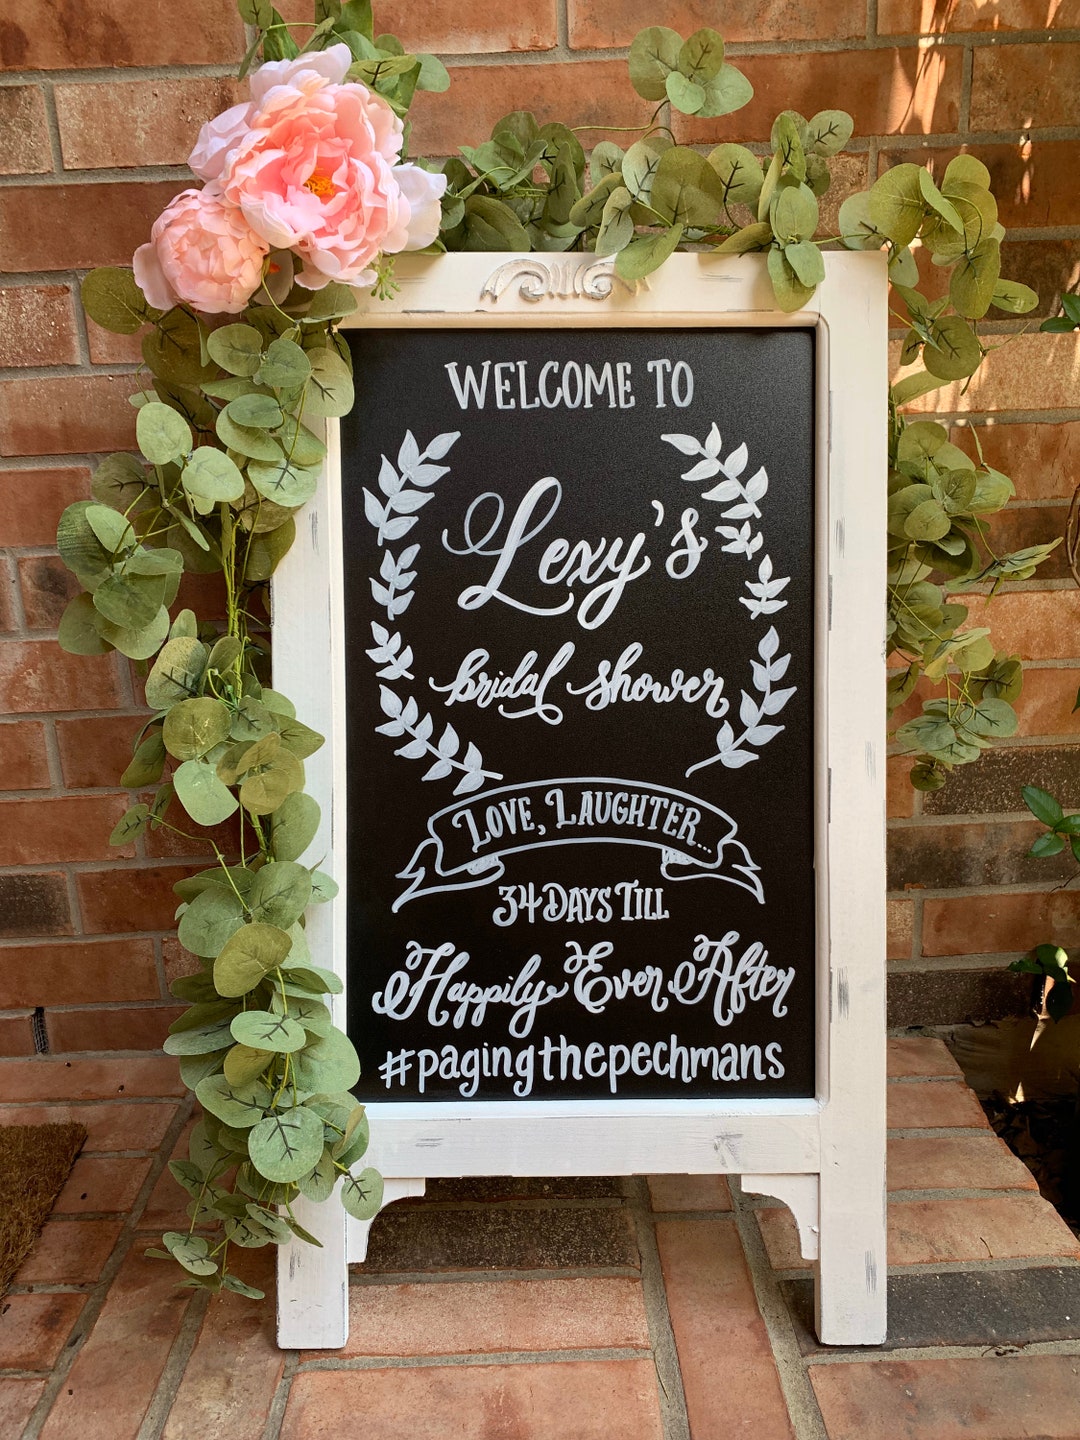 Wedding Welcome Sign Chalkboard Easel for Wedding Bride and Groom Name Sign  A-frame Wedding Sign wedding Sandwich Board Easel 